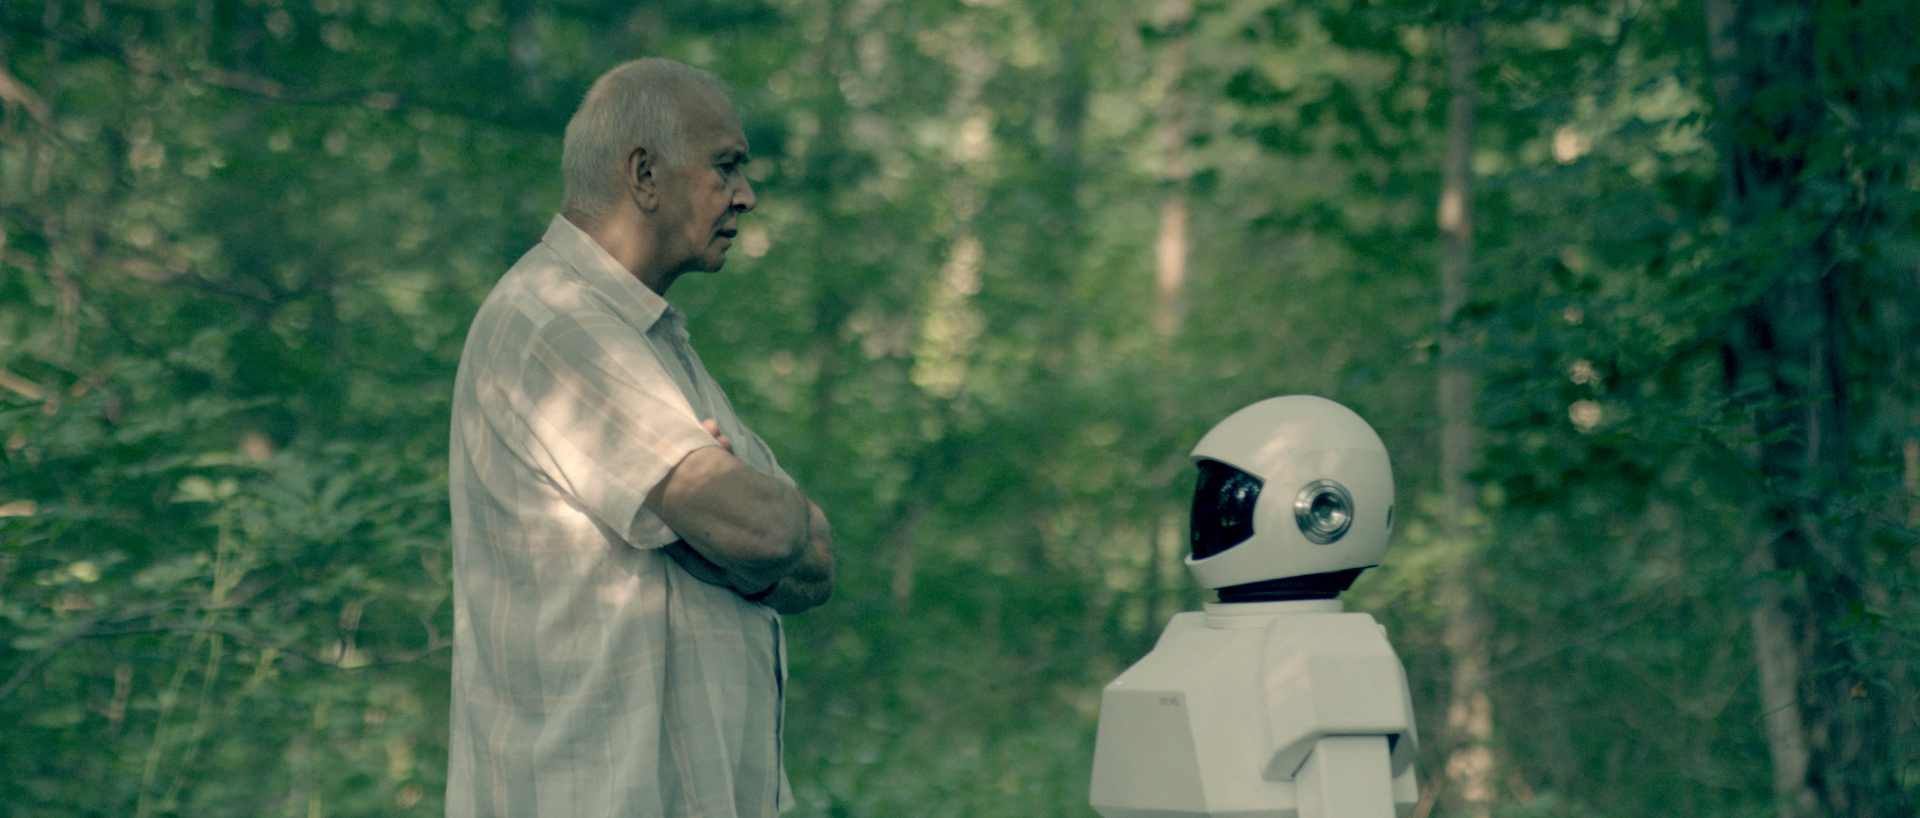 Robot & Frank / Robot & Frank (2012)